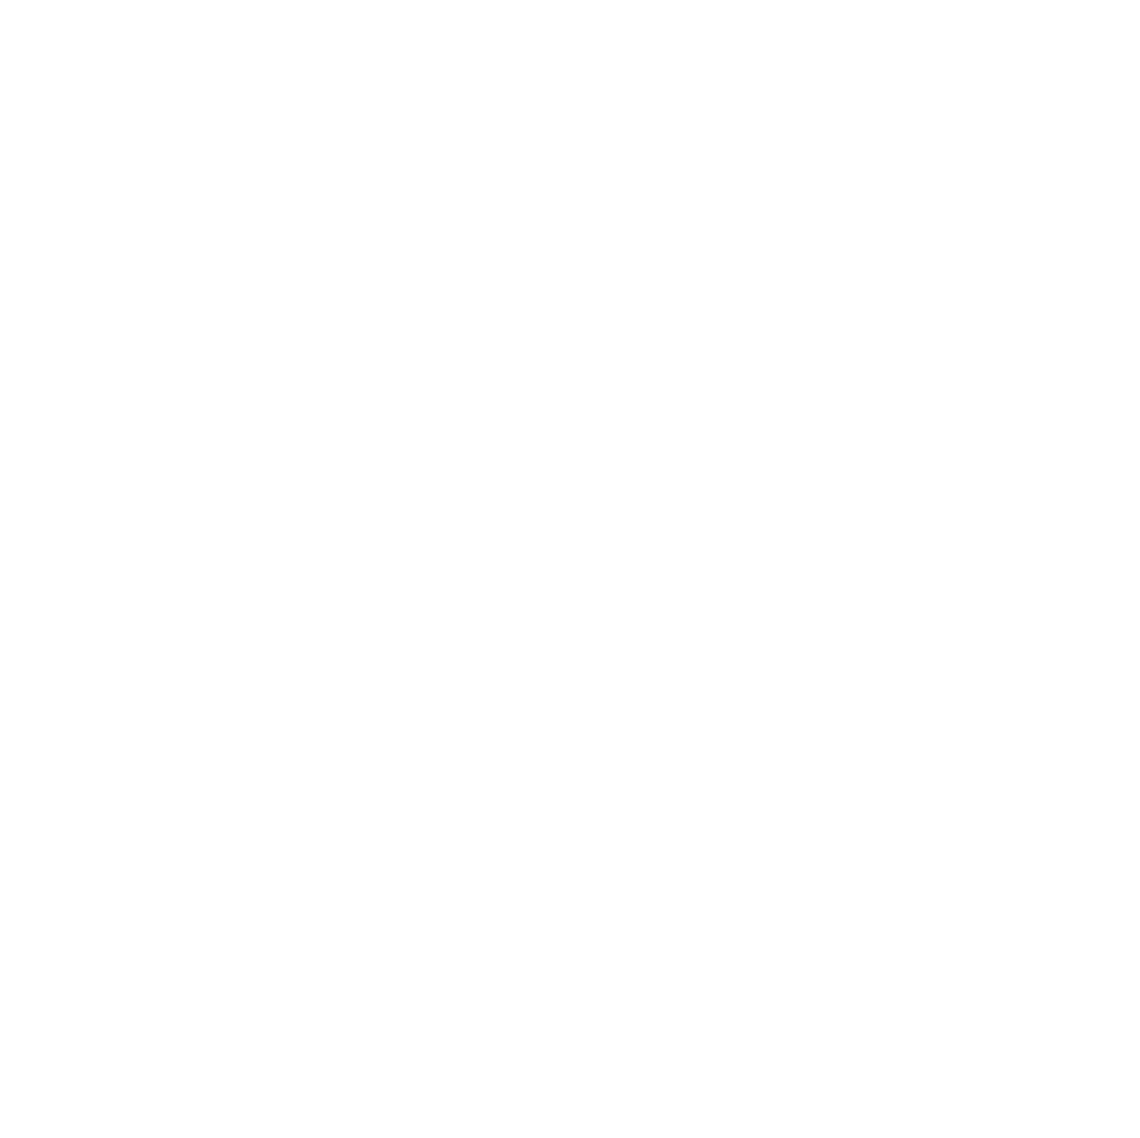 Adam McCain Films